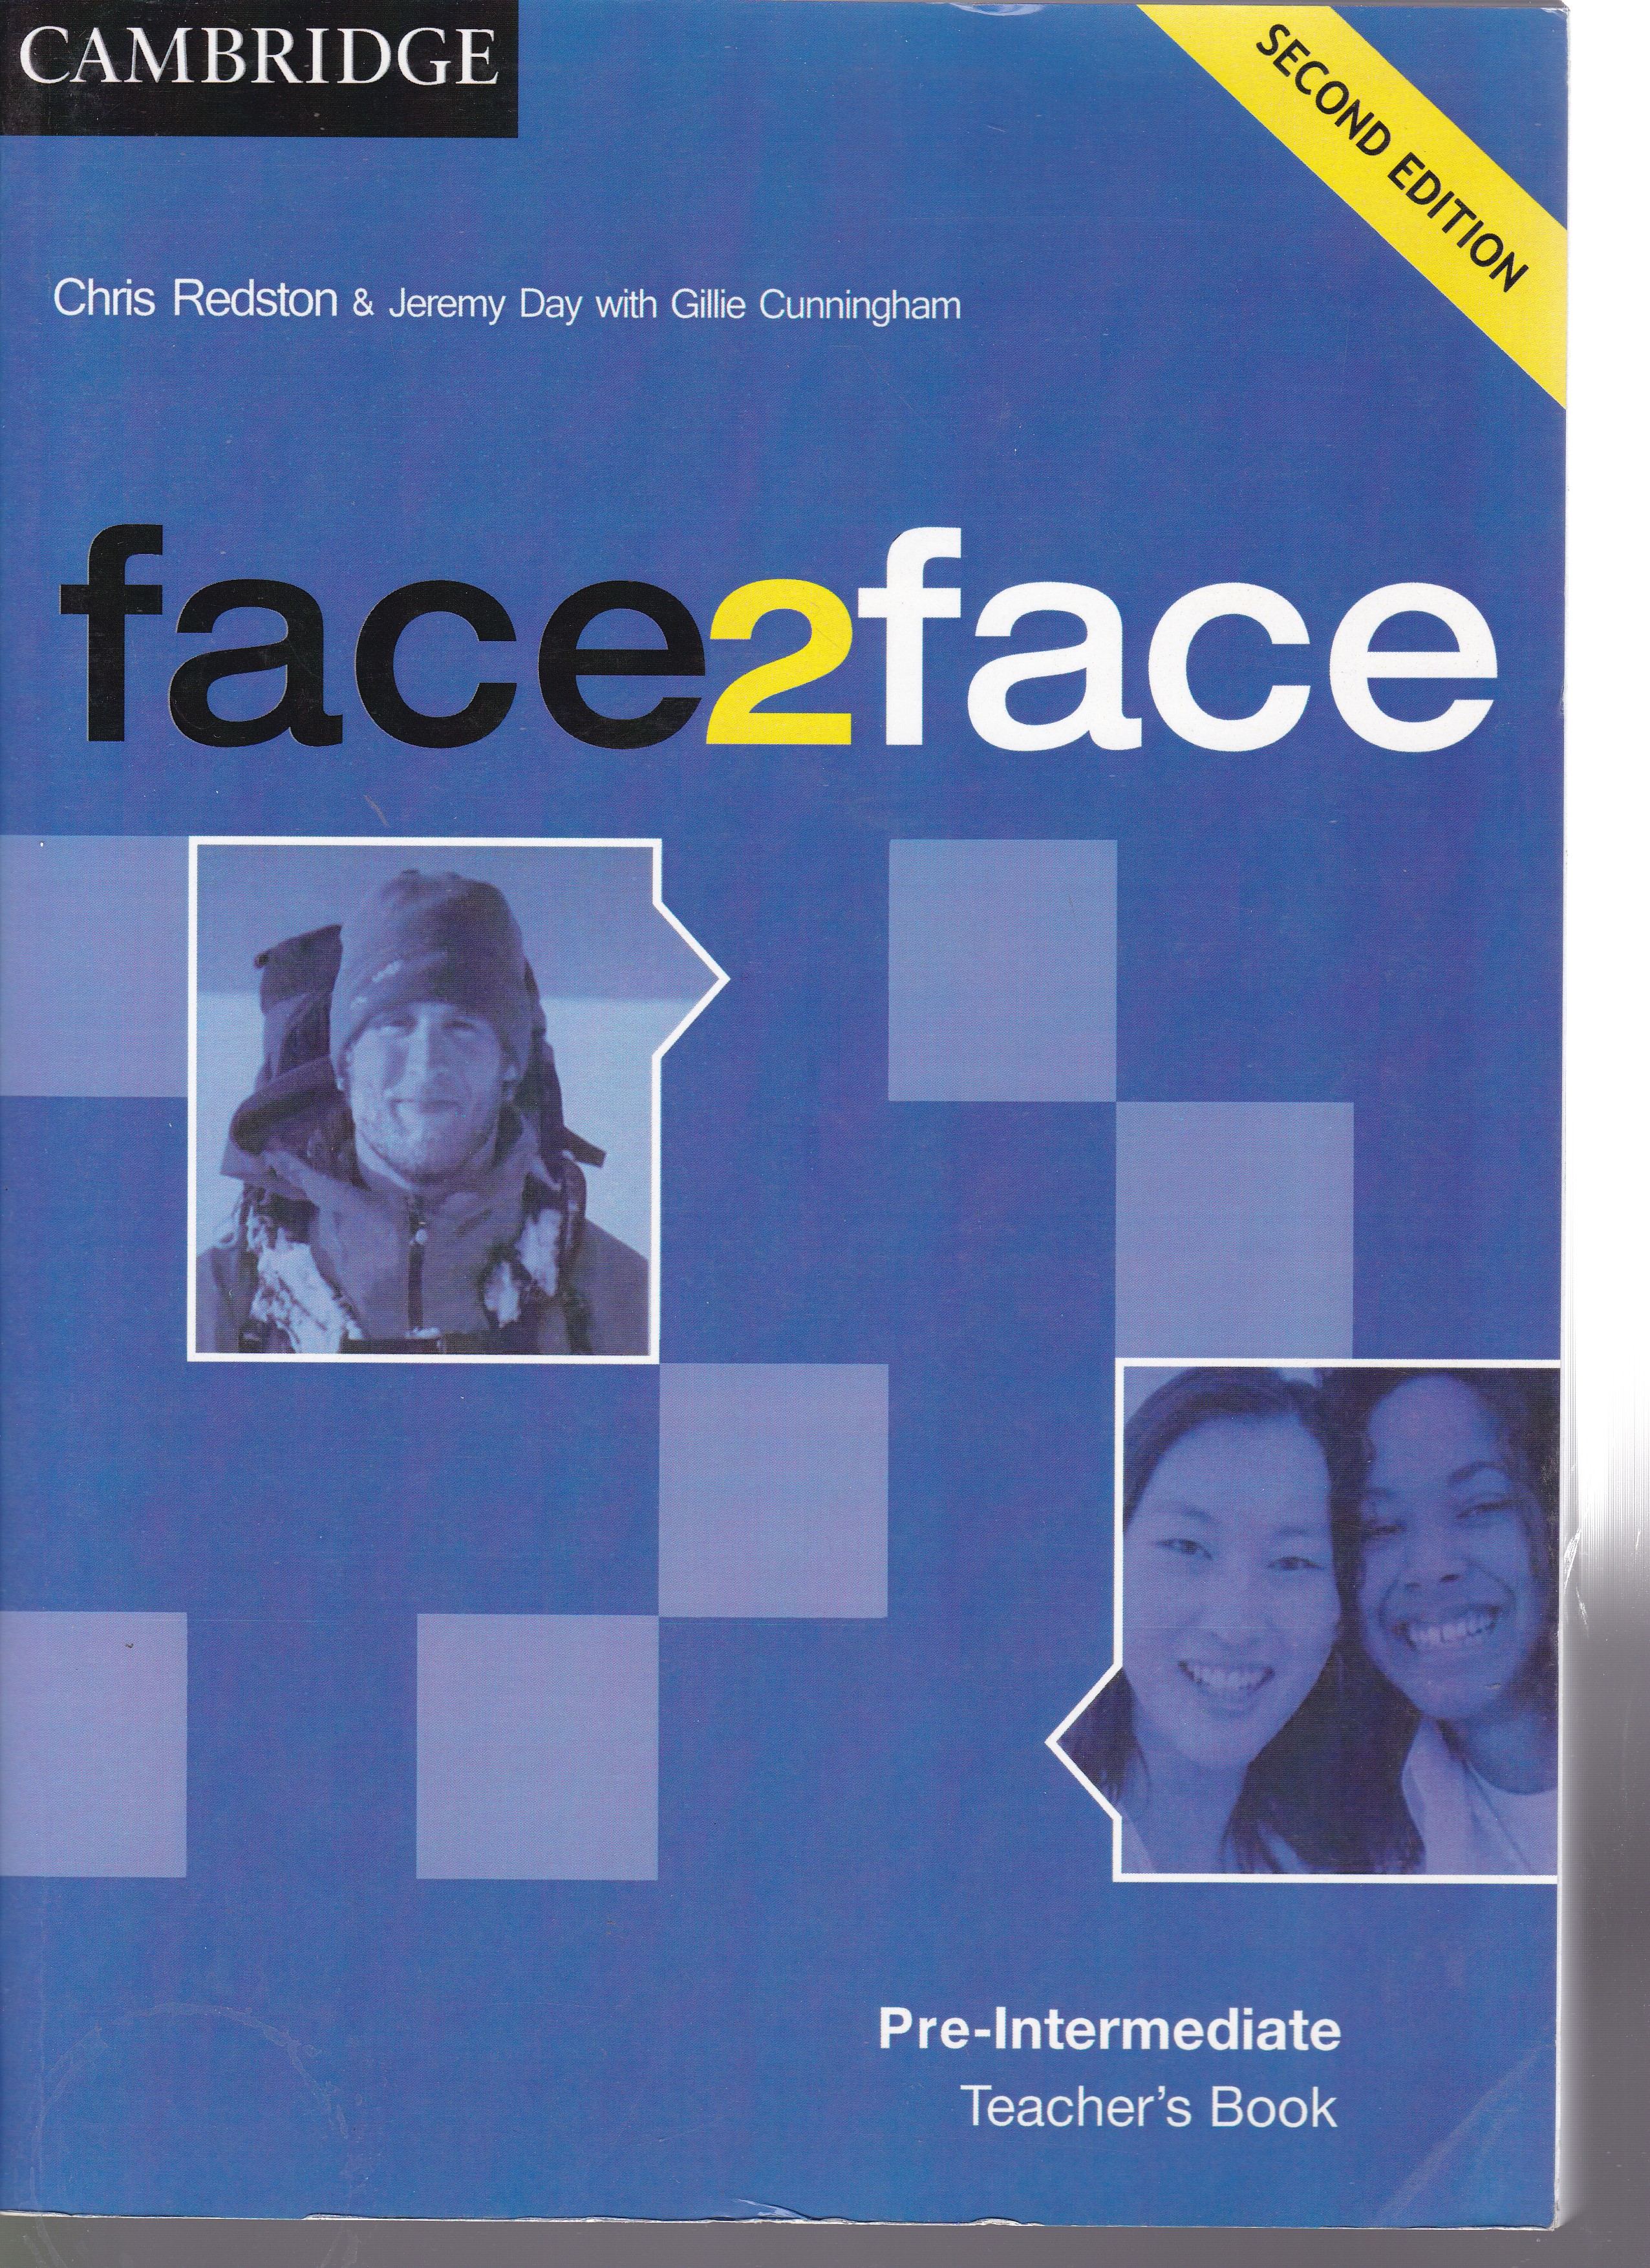 Face2Face pre-intermediate Teacher's Book 